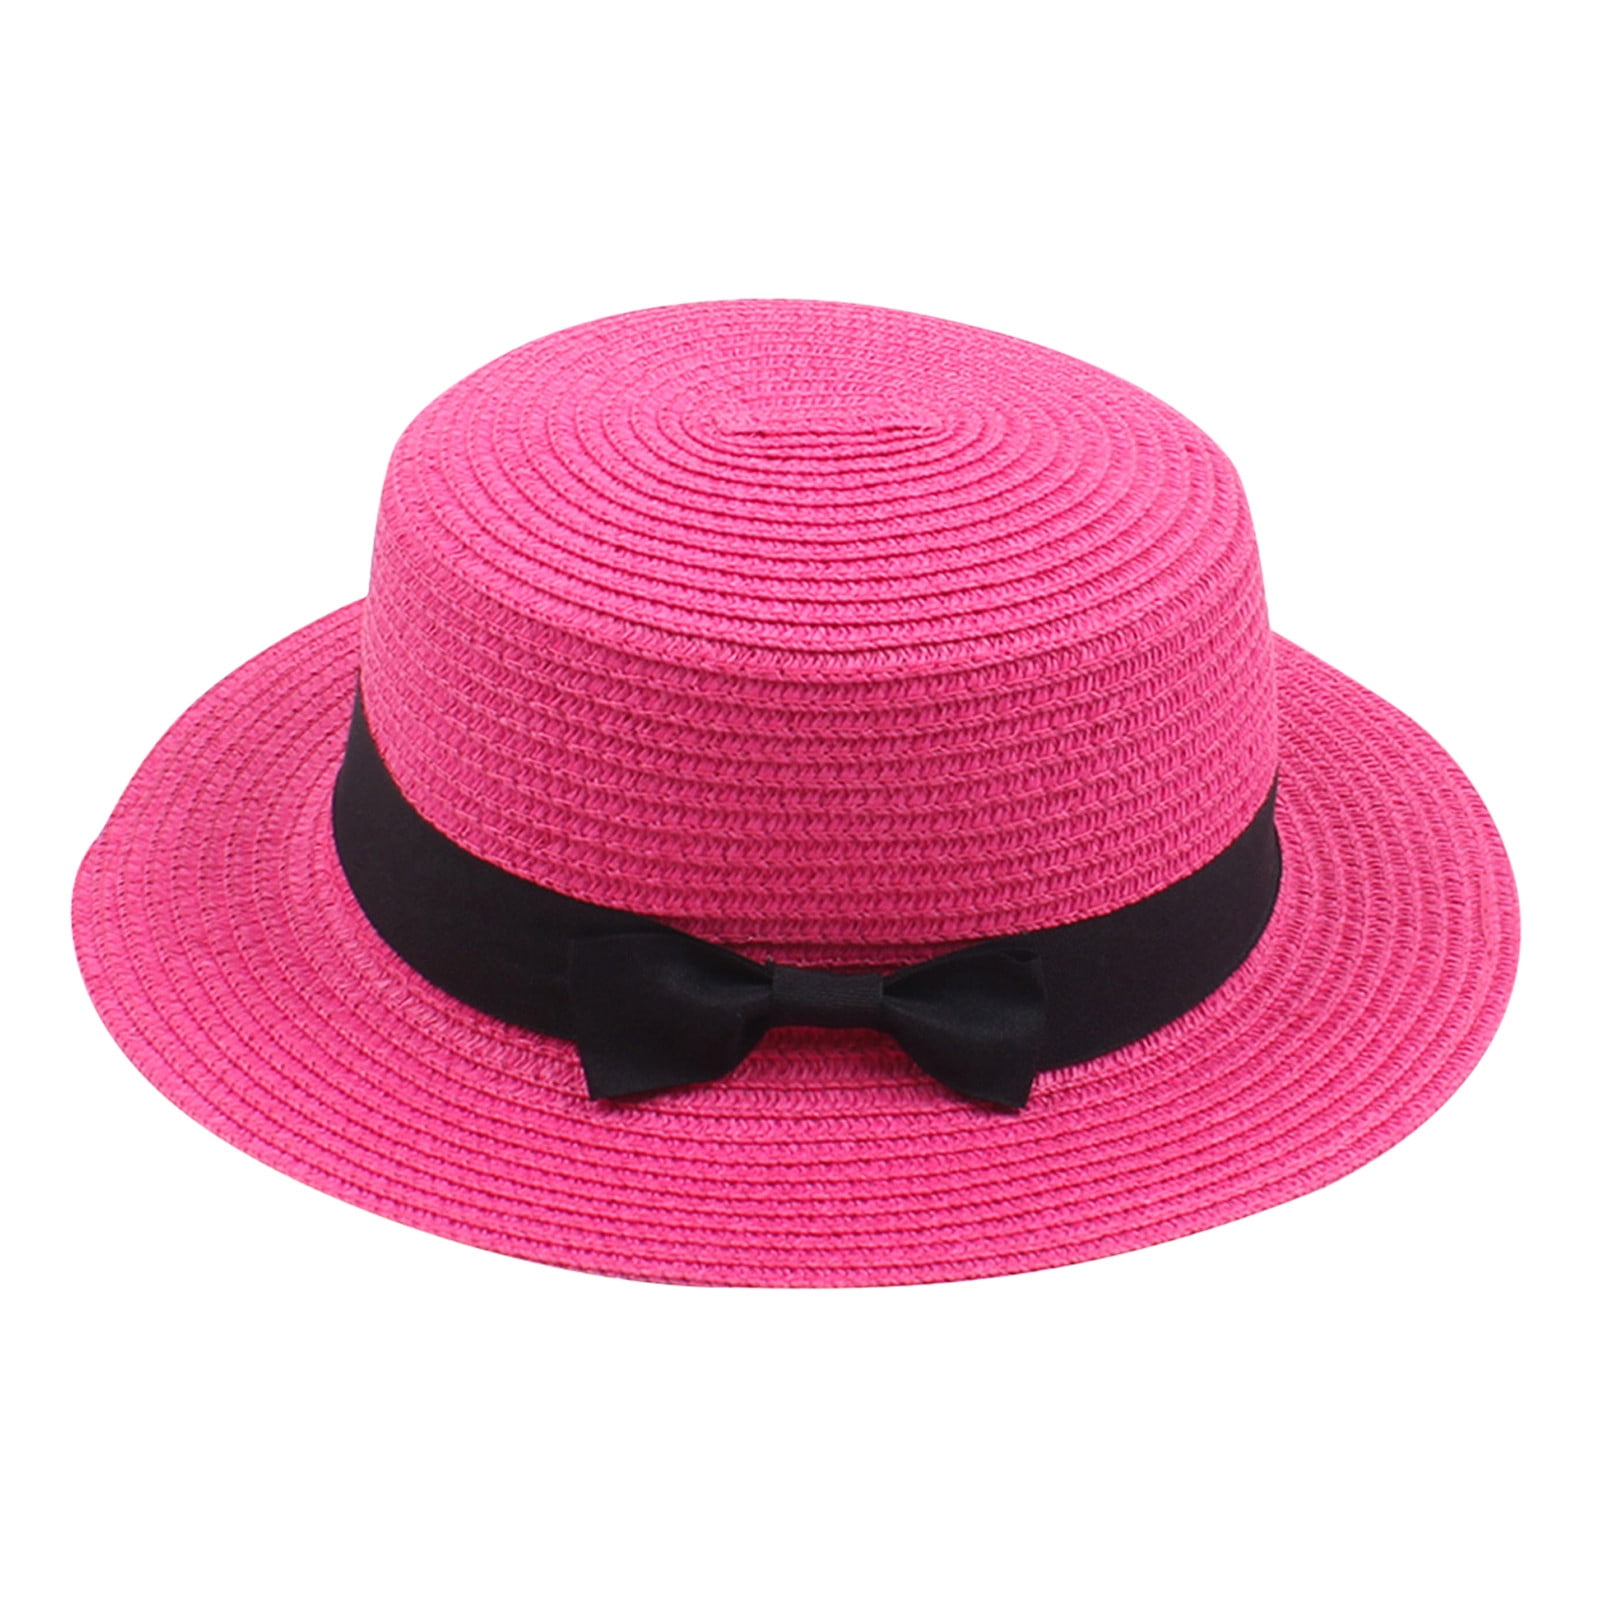 Fsqjgq Sun Hat for Women Packable Buckle Hats Tea Party Hats Kids Summer  Fedora Straw Hat Wide Brim Floppy Beach Sun Cap Visor Hat 